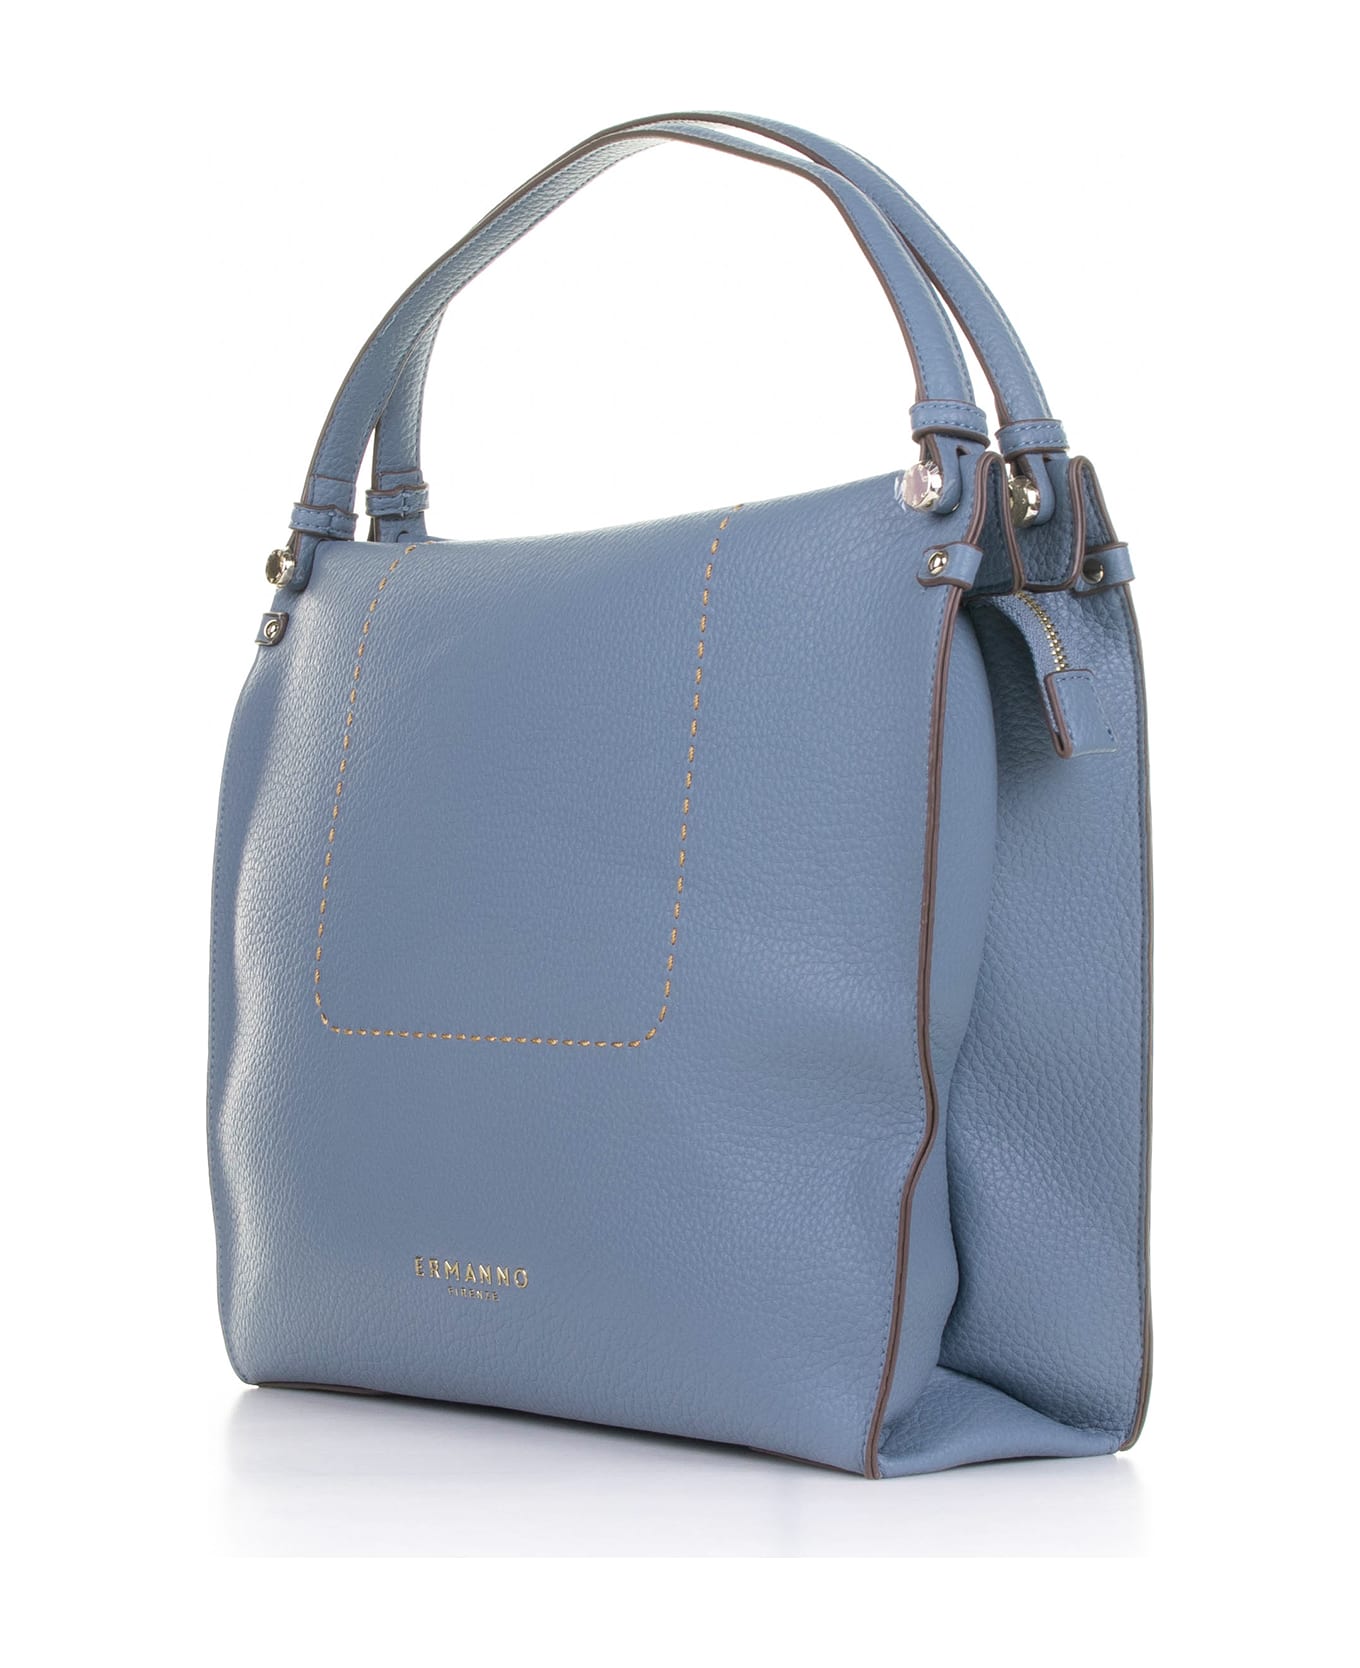 Ermanno Scervino Petra Light Blue Leather Shopping Bag - AZZURRO